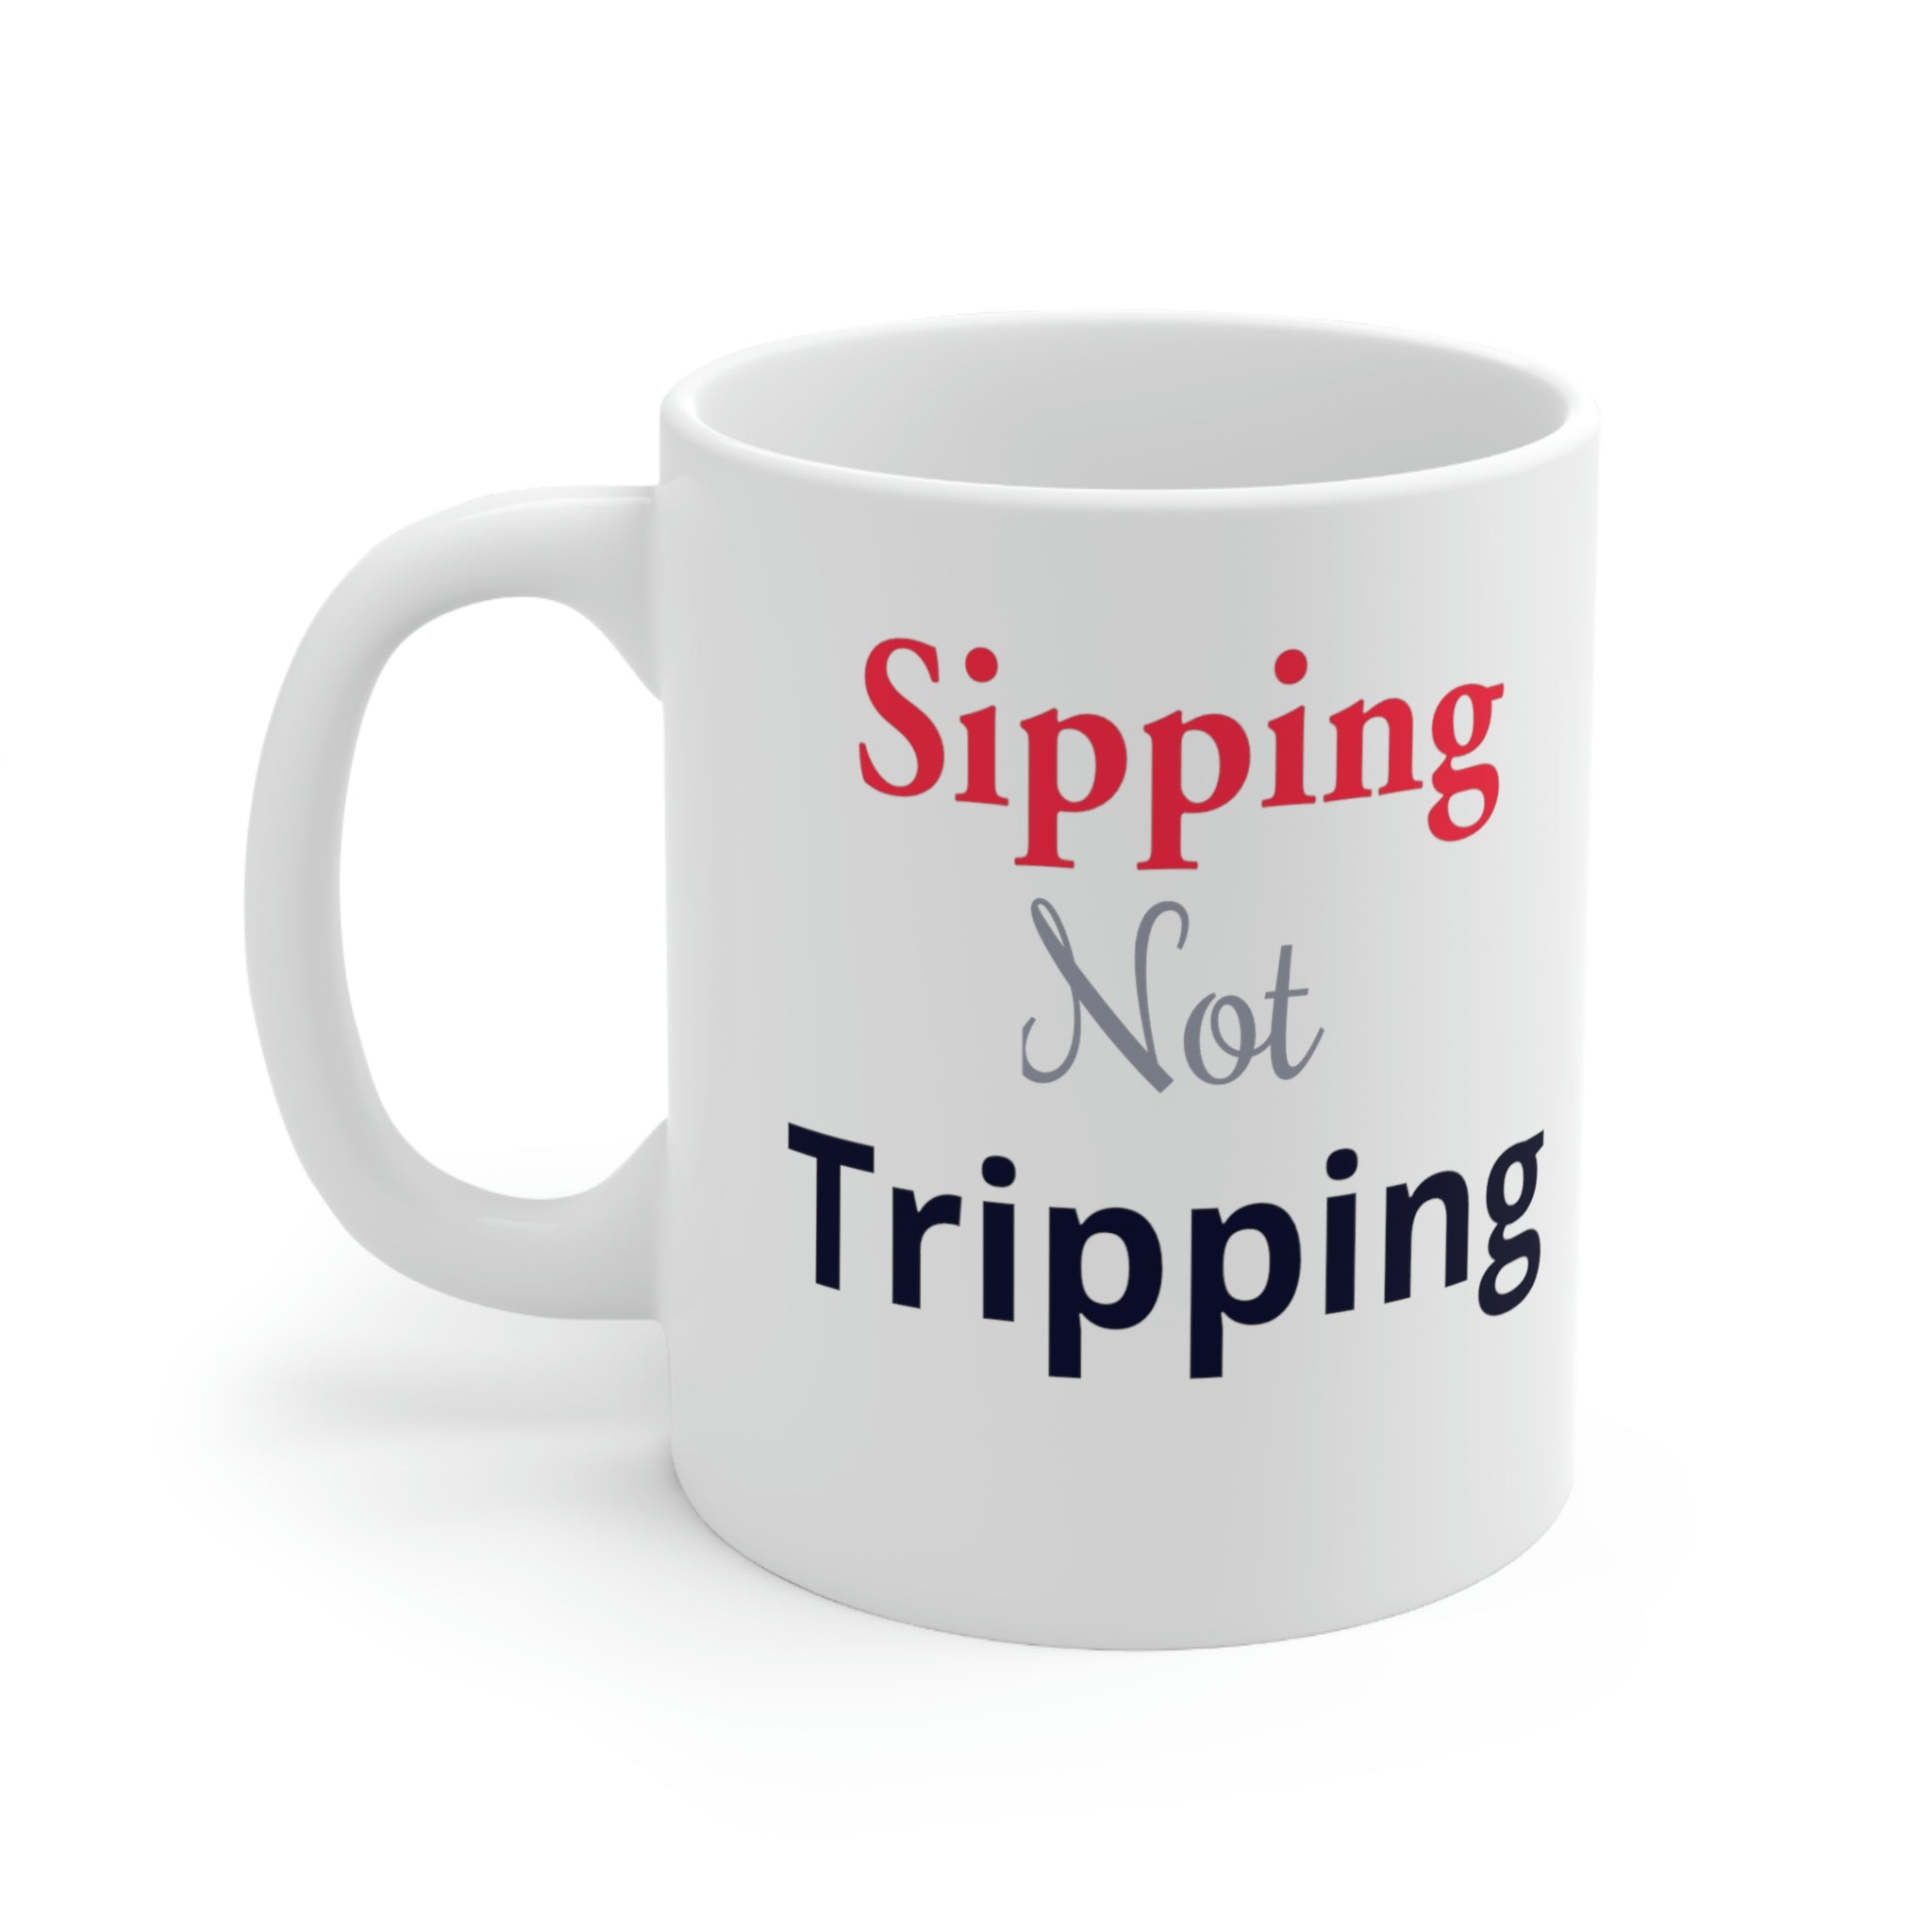 Sipping Not Tripping Ceramic Mug 11oz